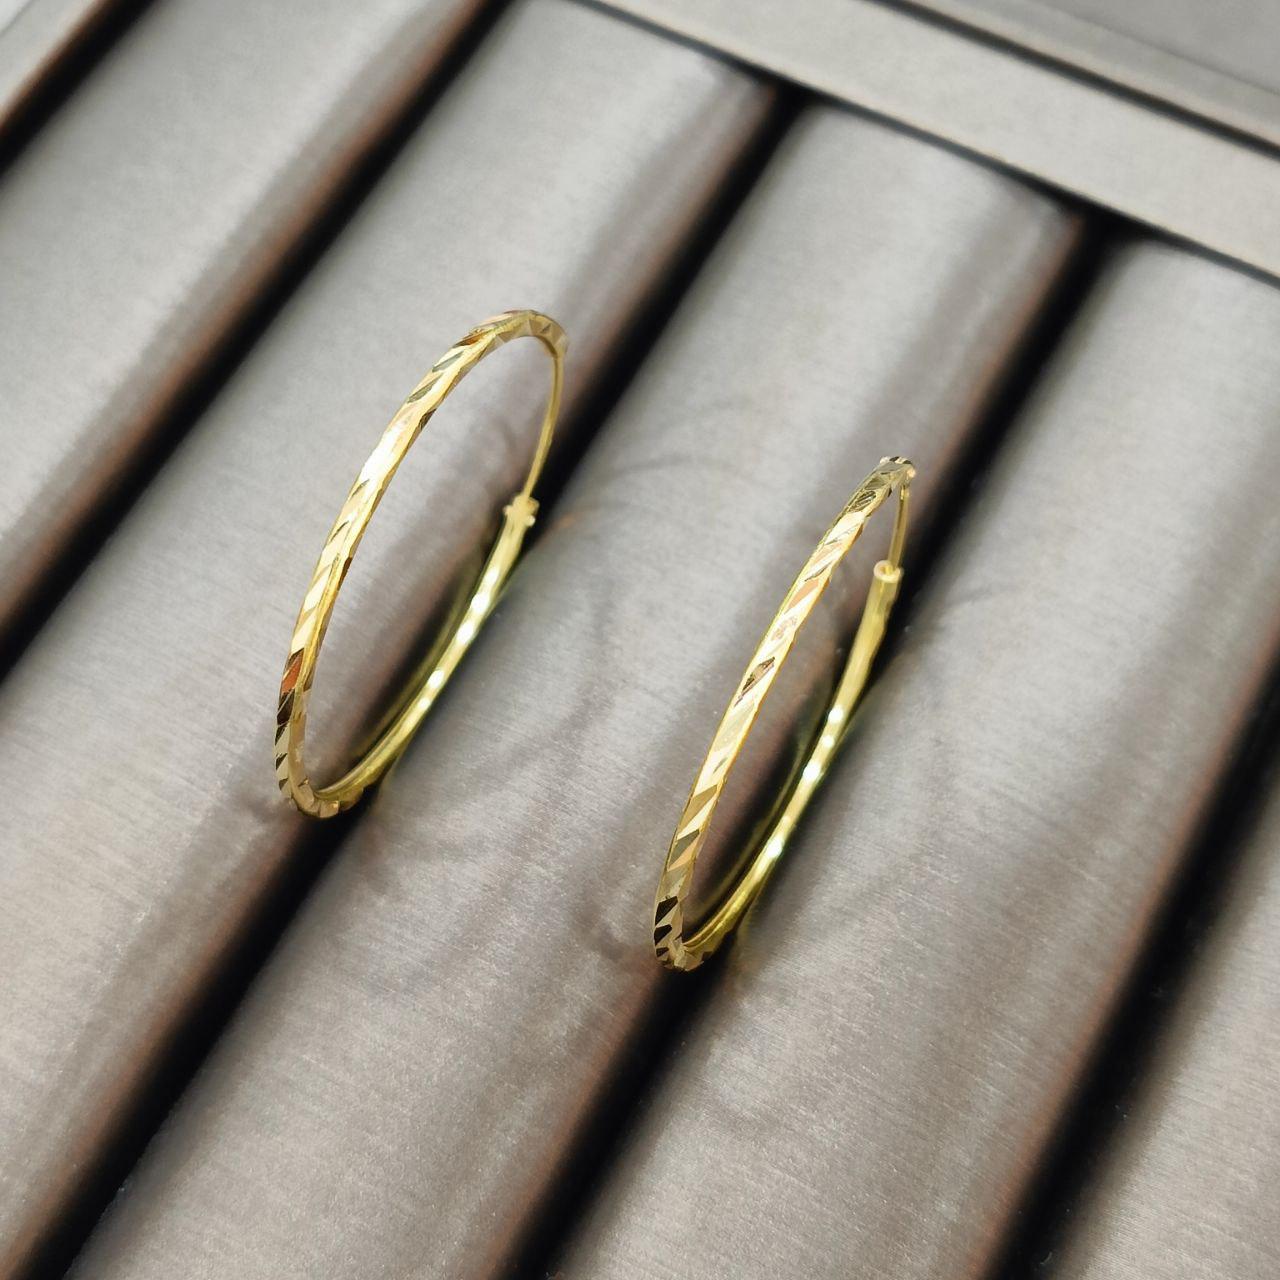 22k / 916 gold Cutting Loop Earring V2-916 gold-Best Gold Shop